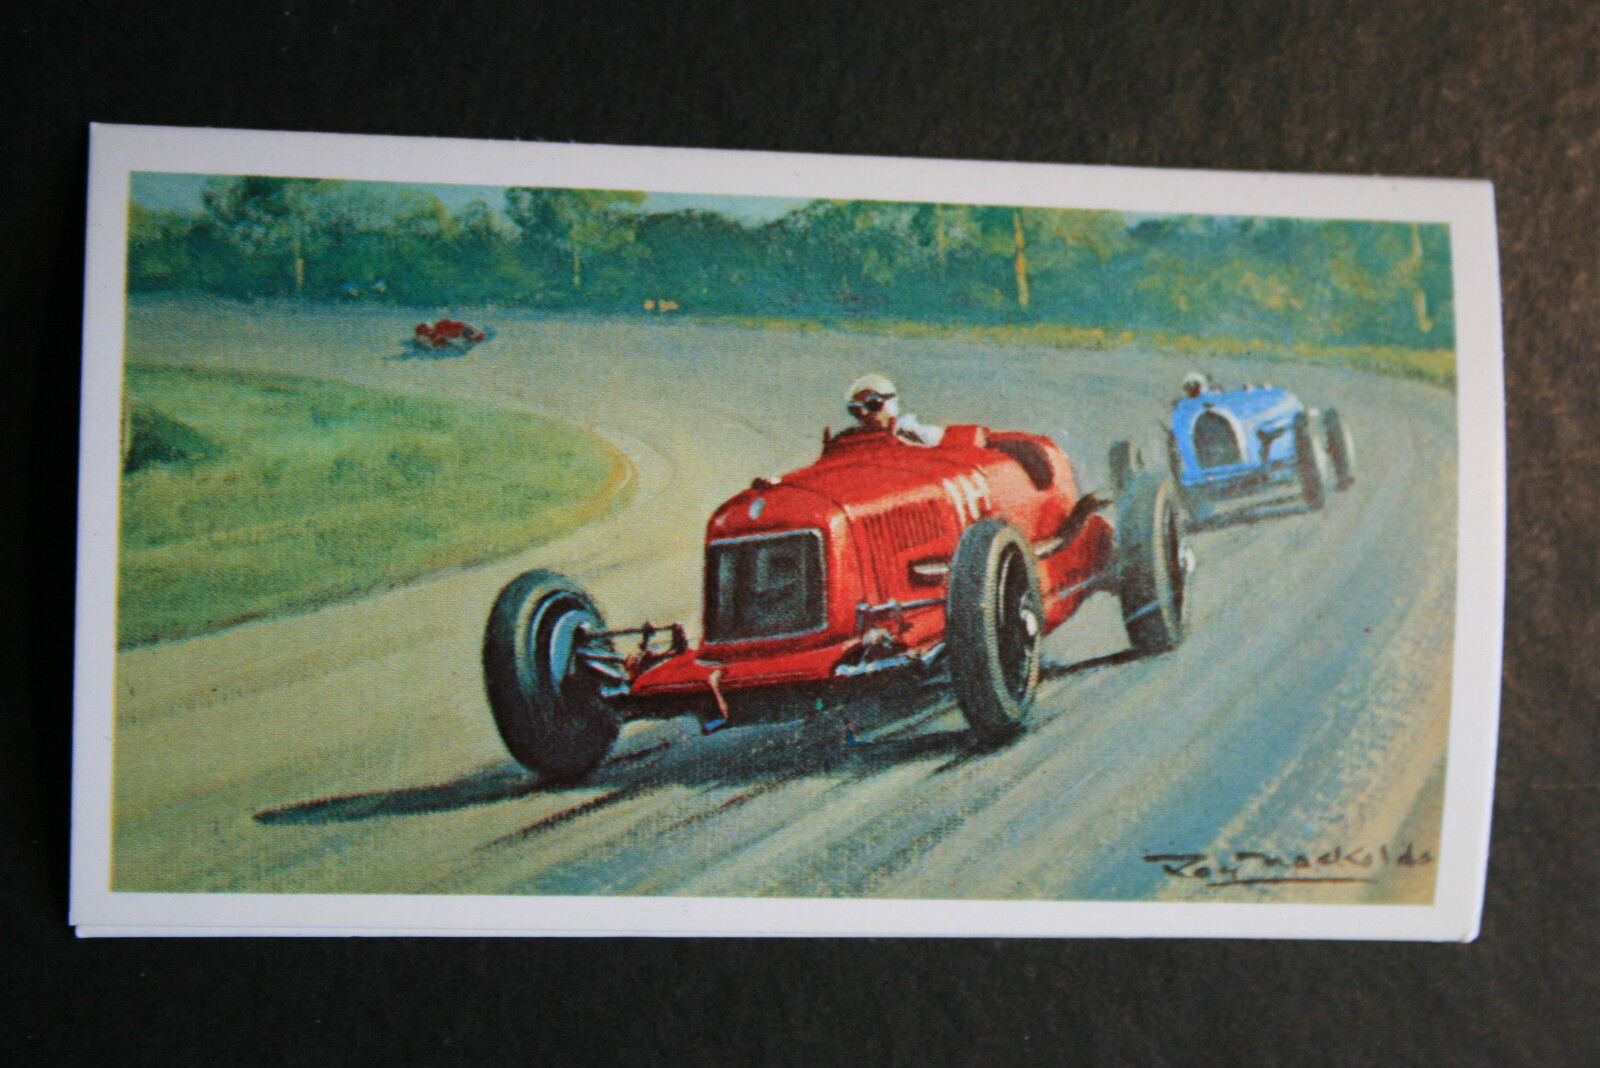 MASERATI 8C 2800  Fagioli  1931 Monza Grand Prix   Motor Racing Card  BD13